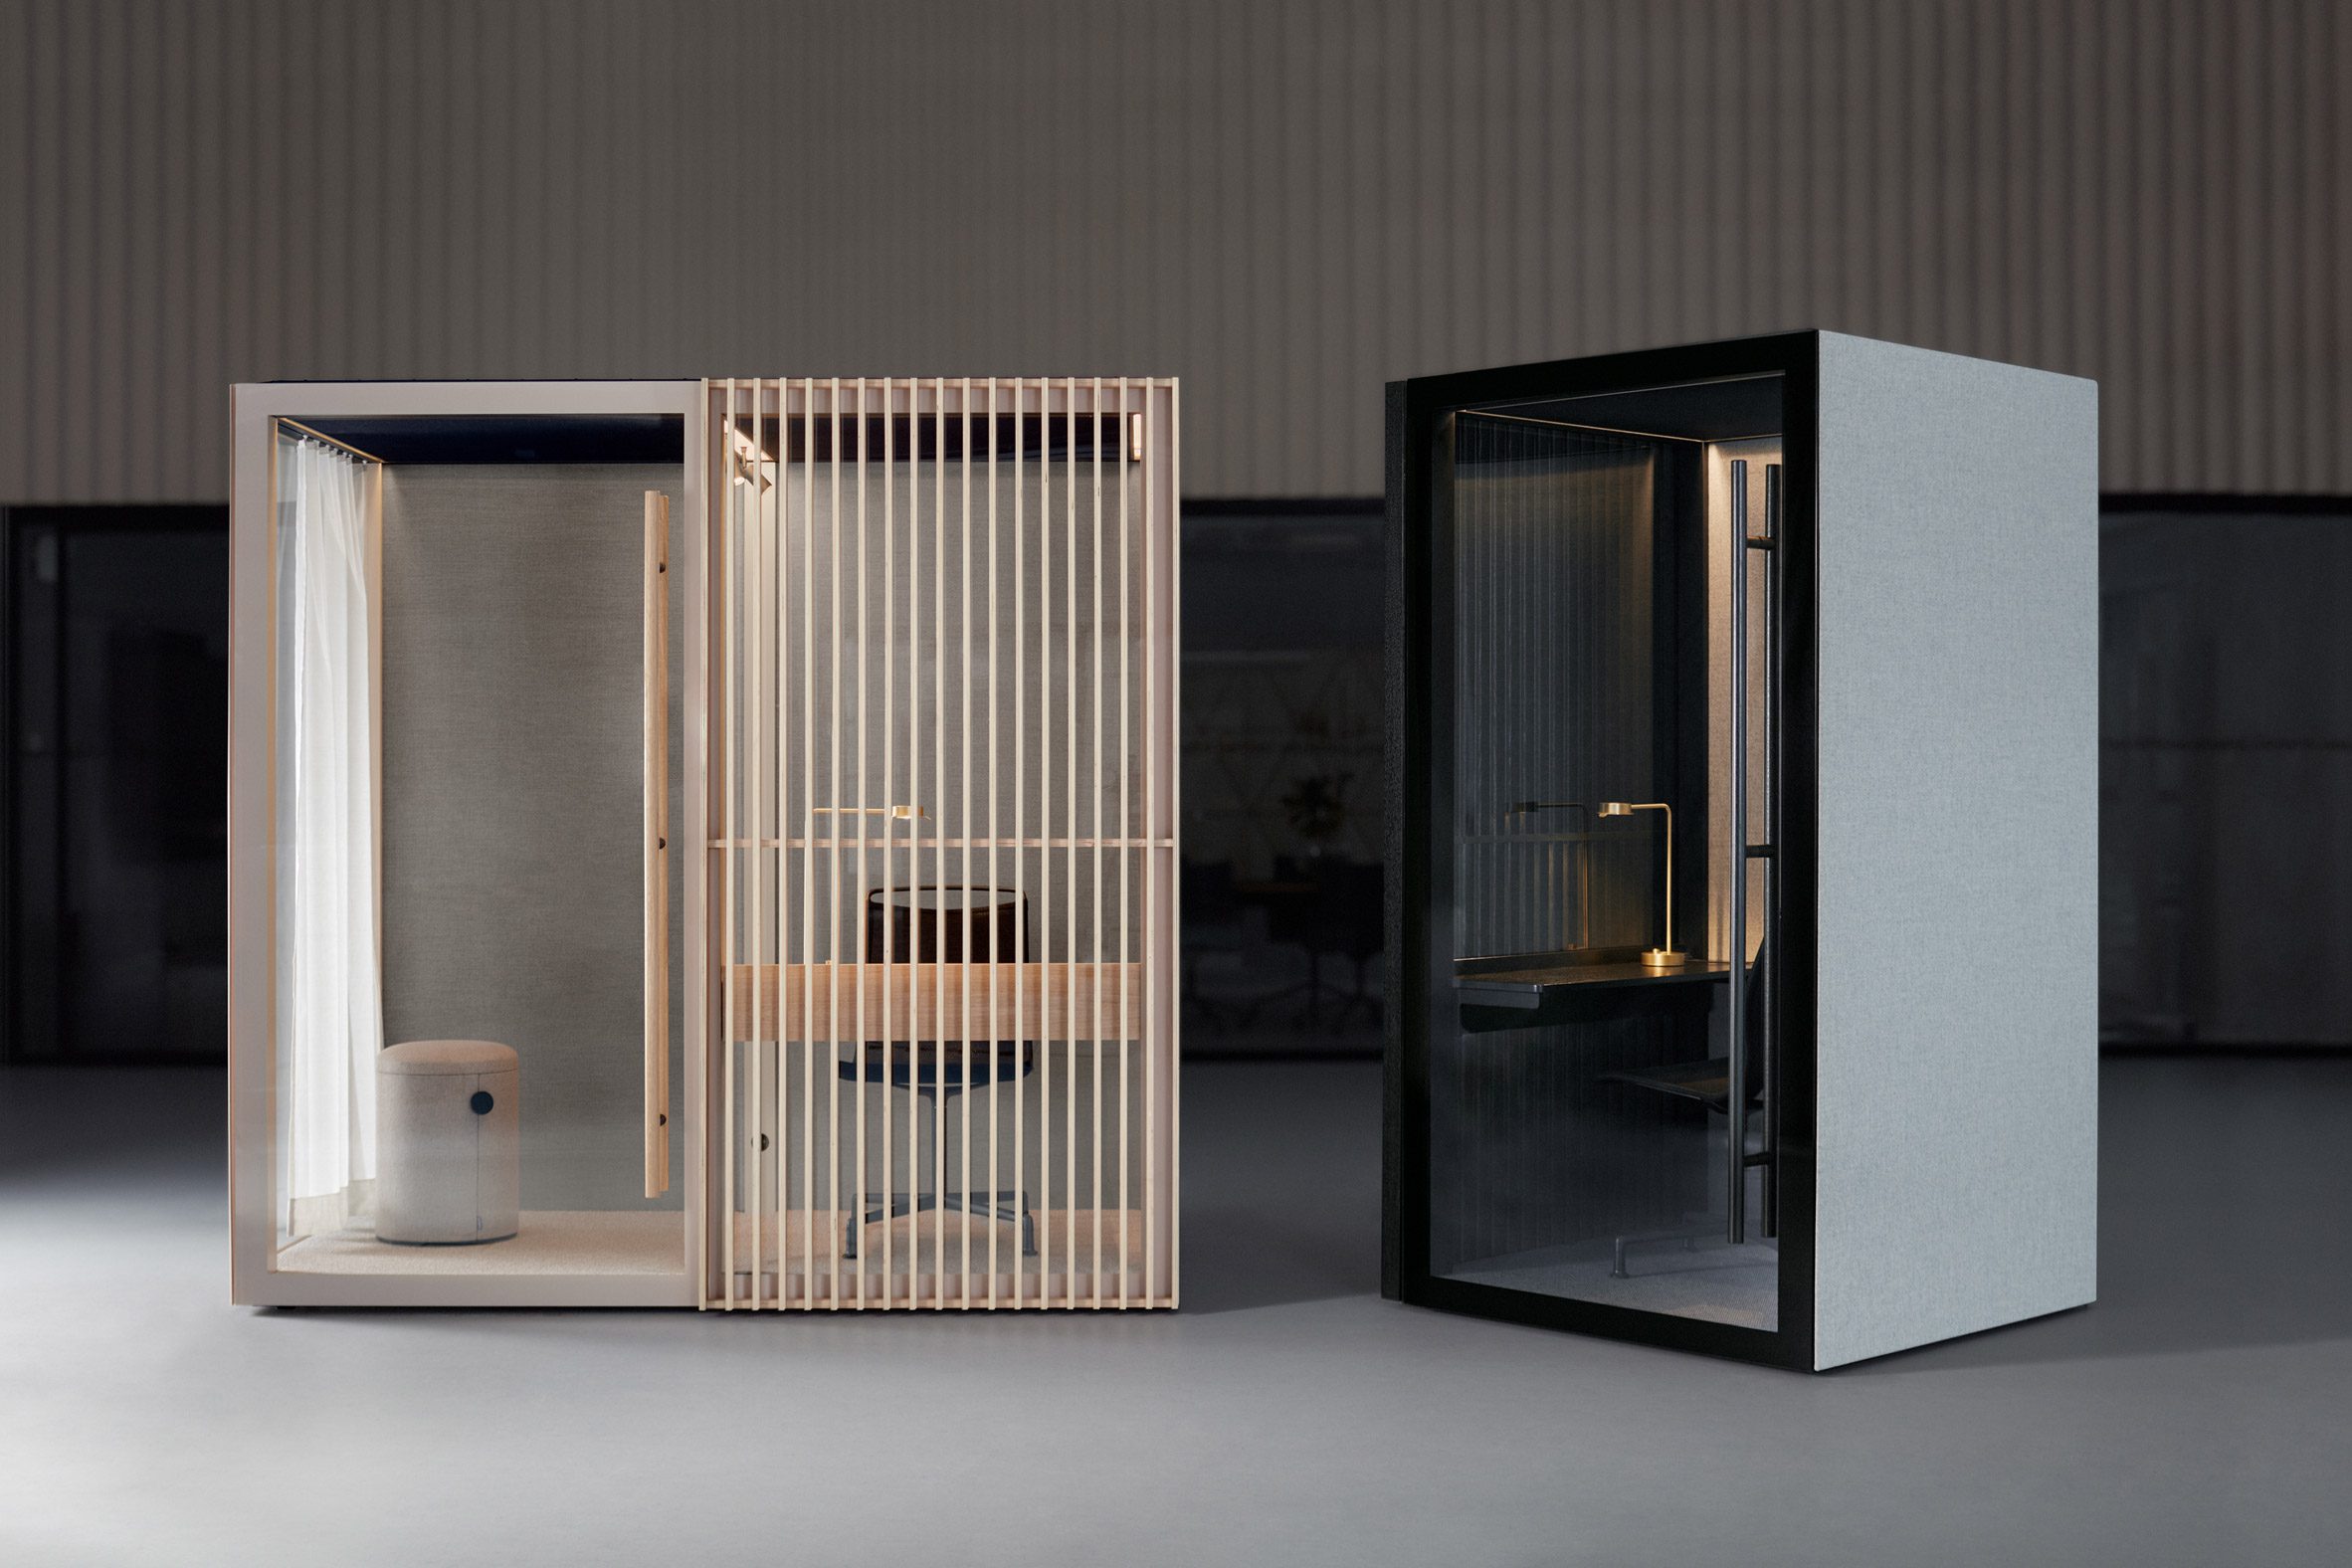 Milan furniture fair launches new digital platform - Furniture Today